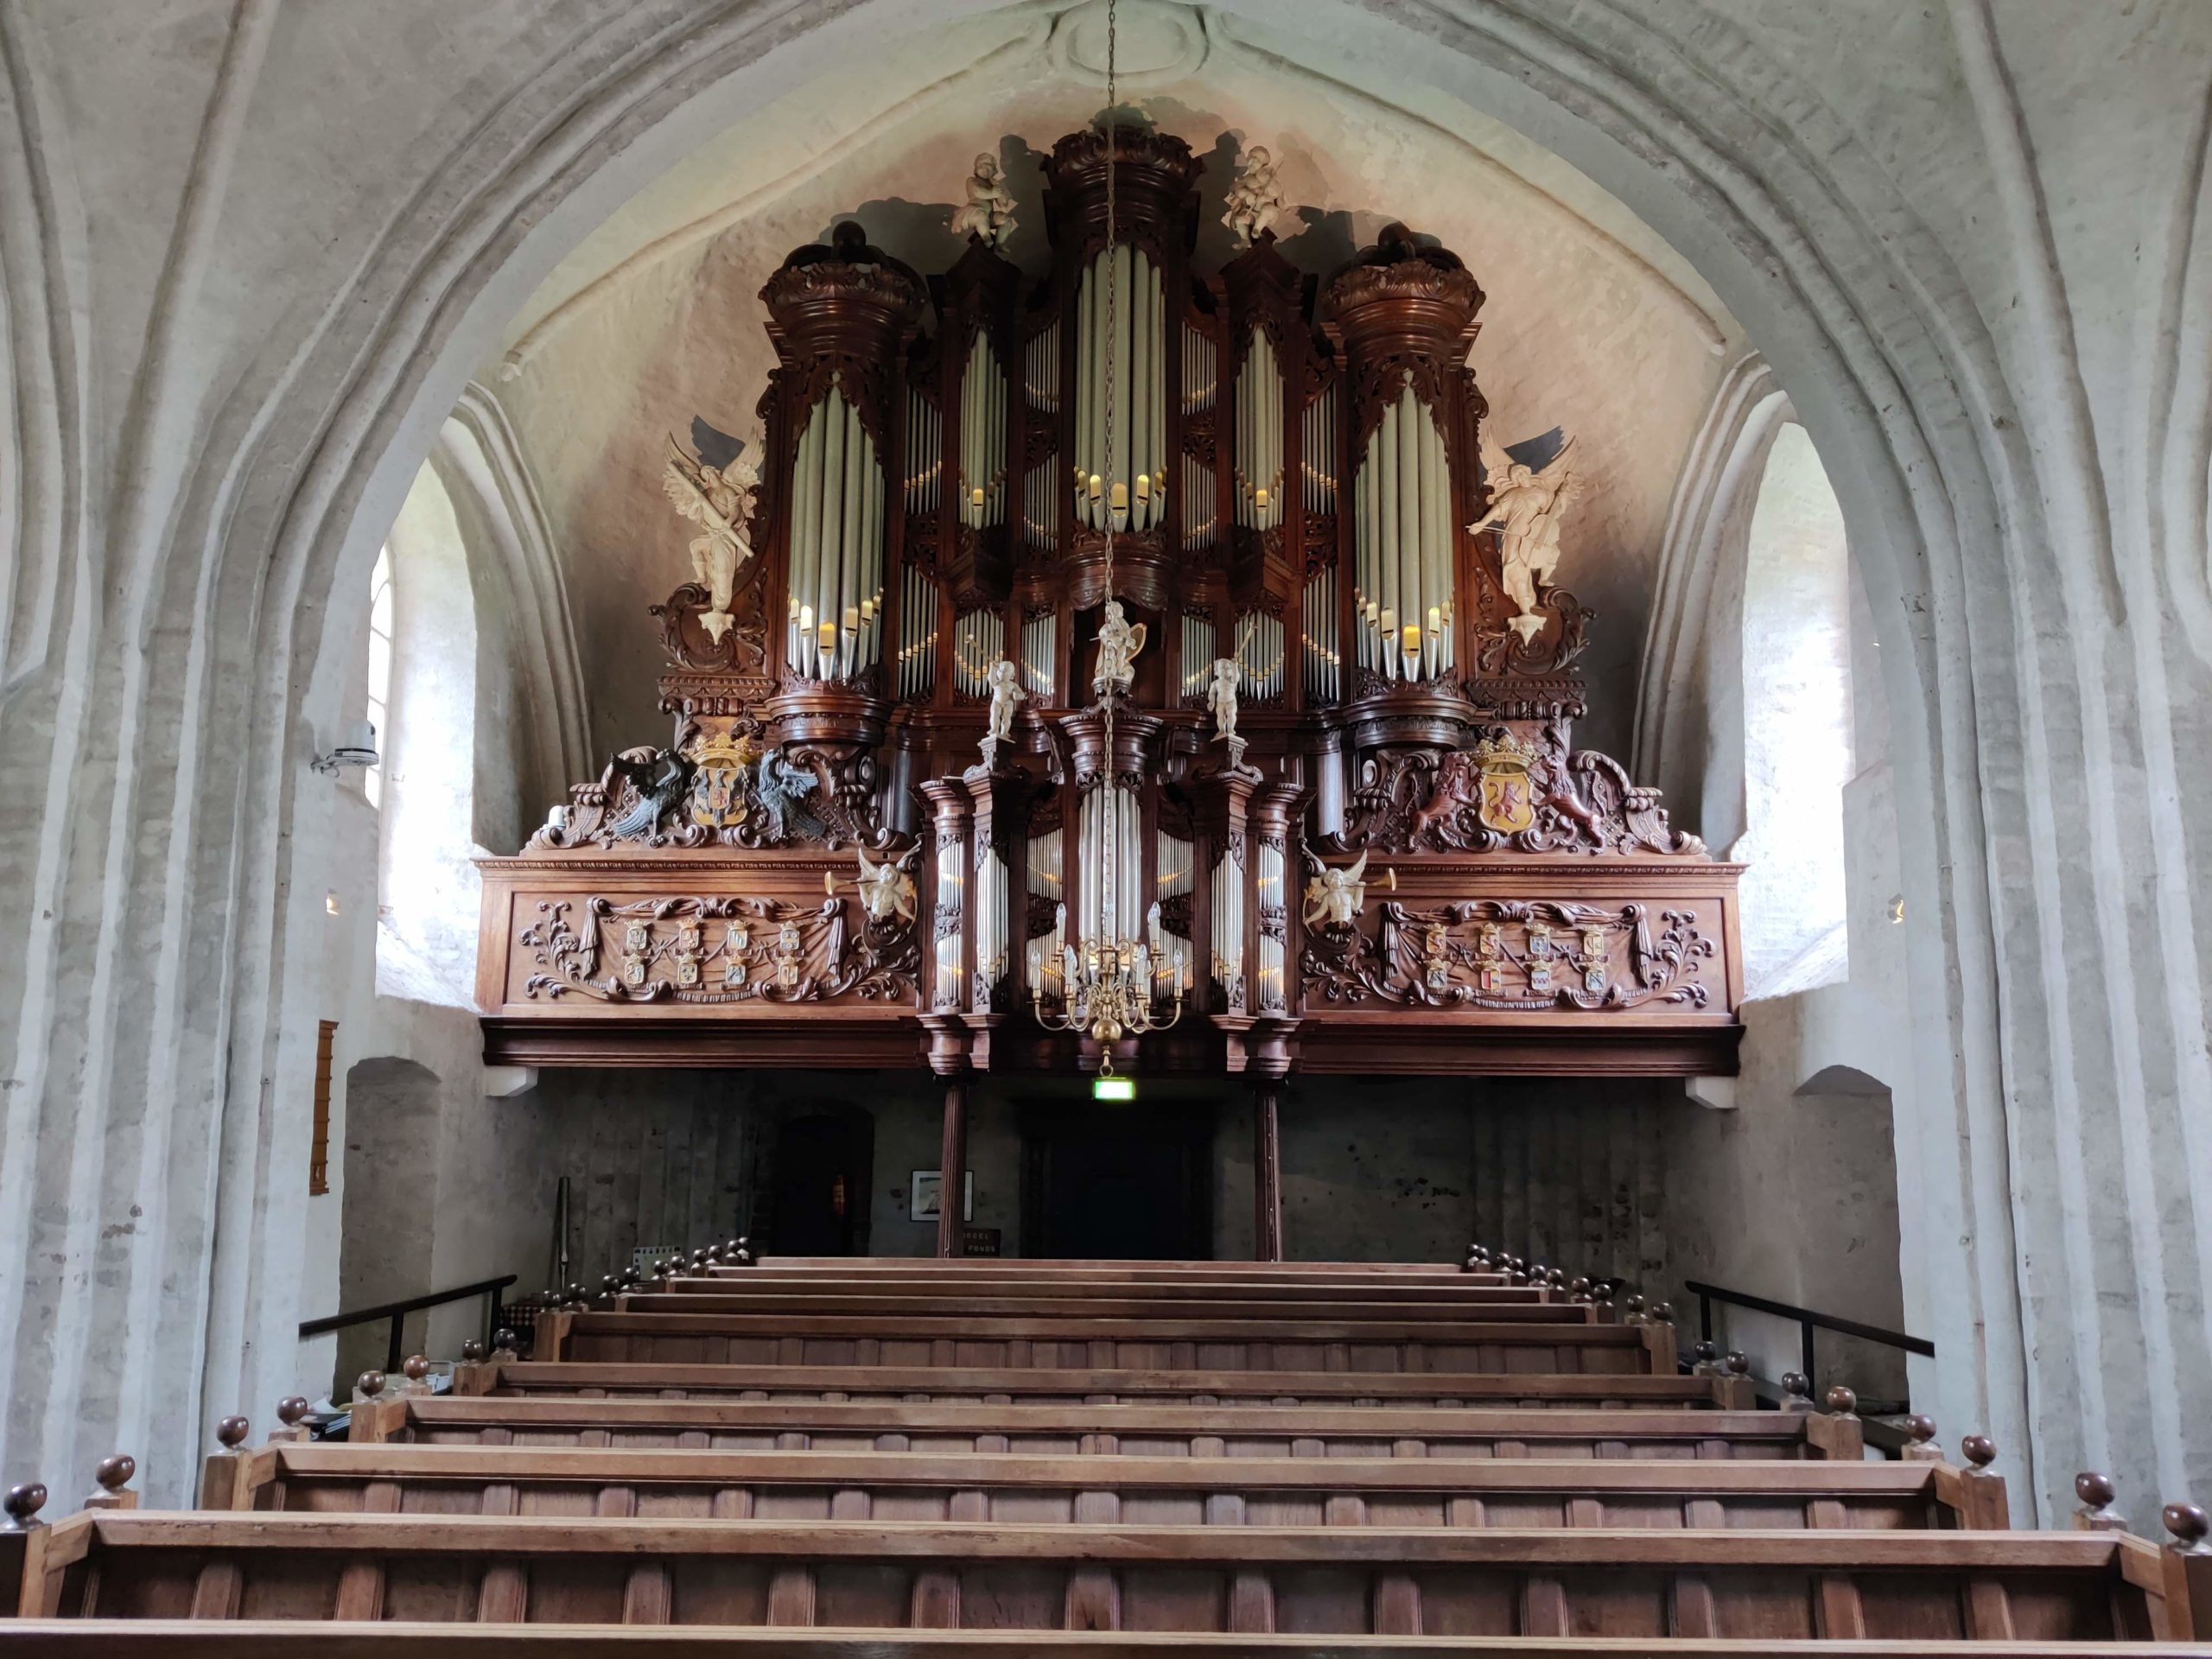 The organ at Petruskerk van Leens